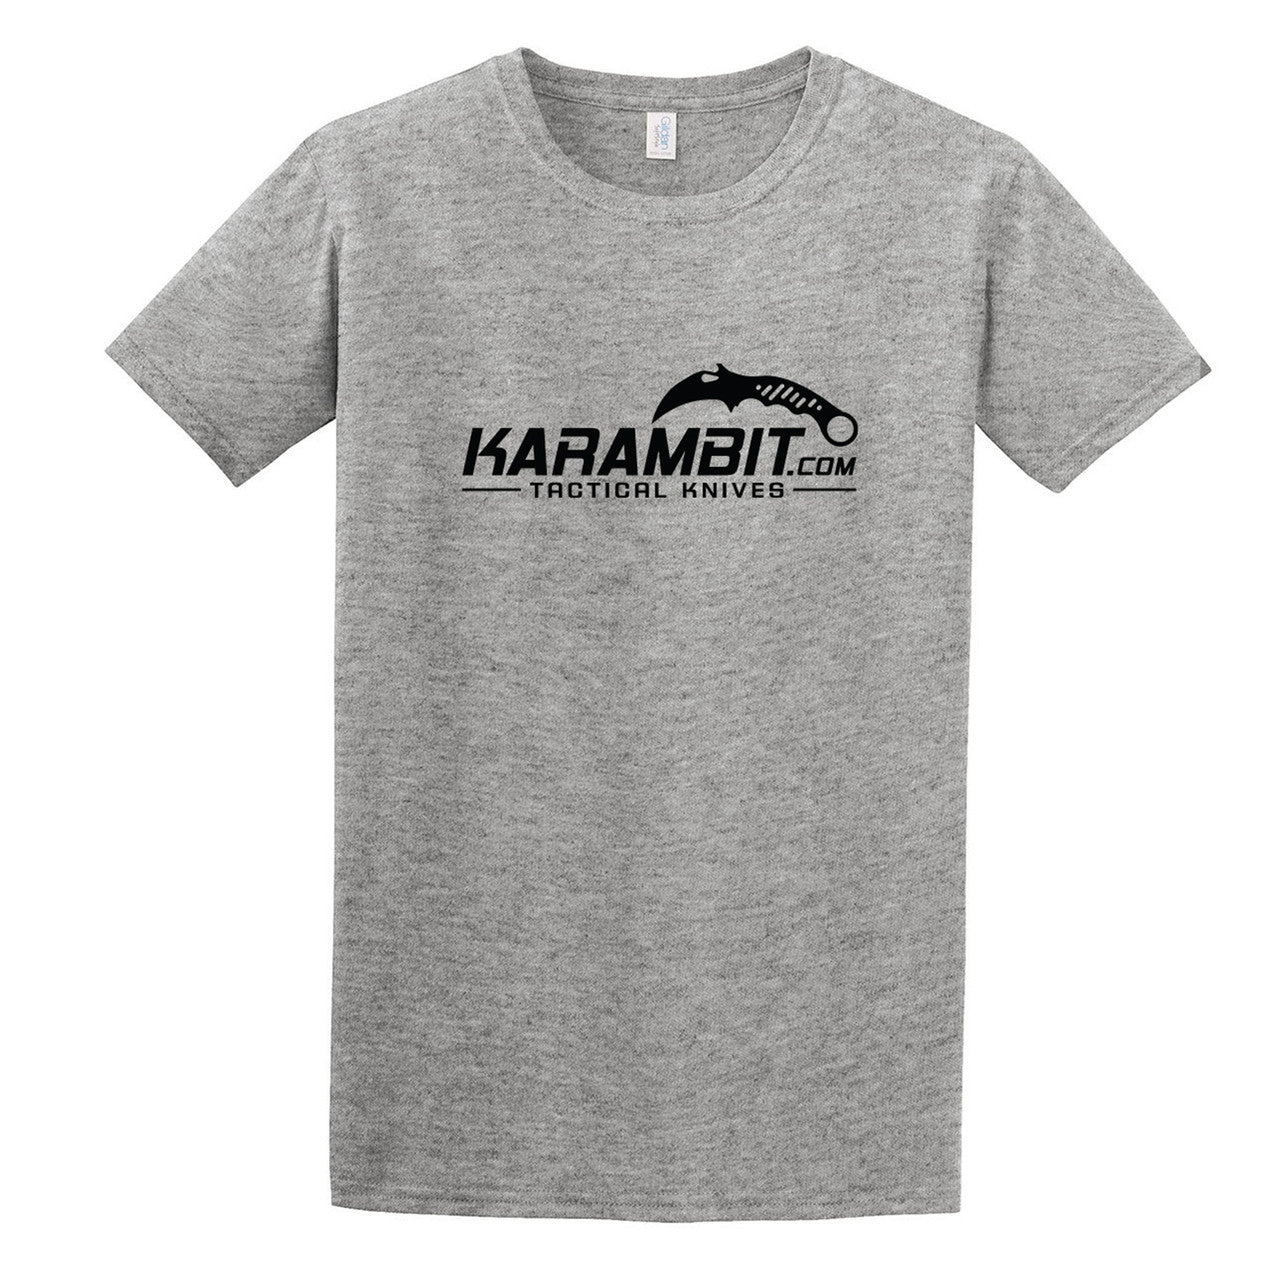 Karambit.com Softstyle® T-Shirt, Color: Sport Grey, front of shirt w/ Karambit.com black logo. (KbitlogoSoftstyleTee-SportGrey)